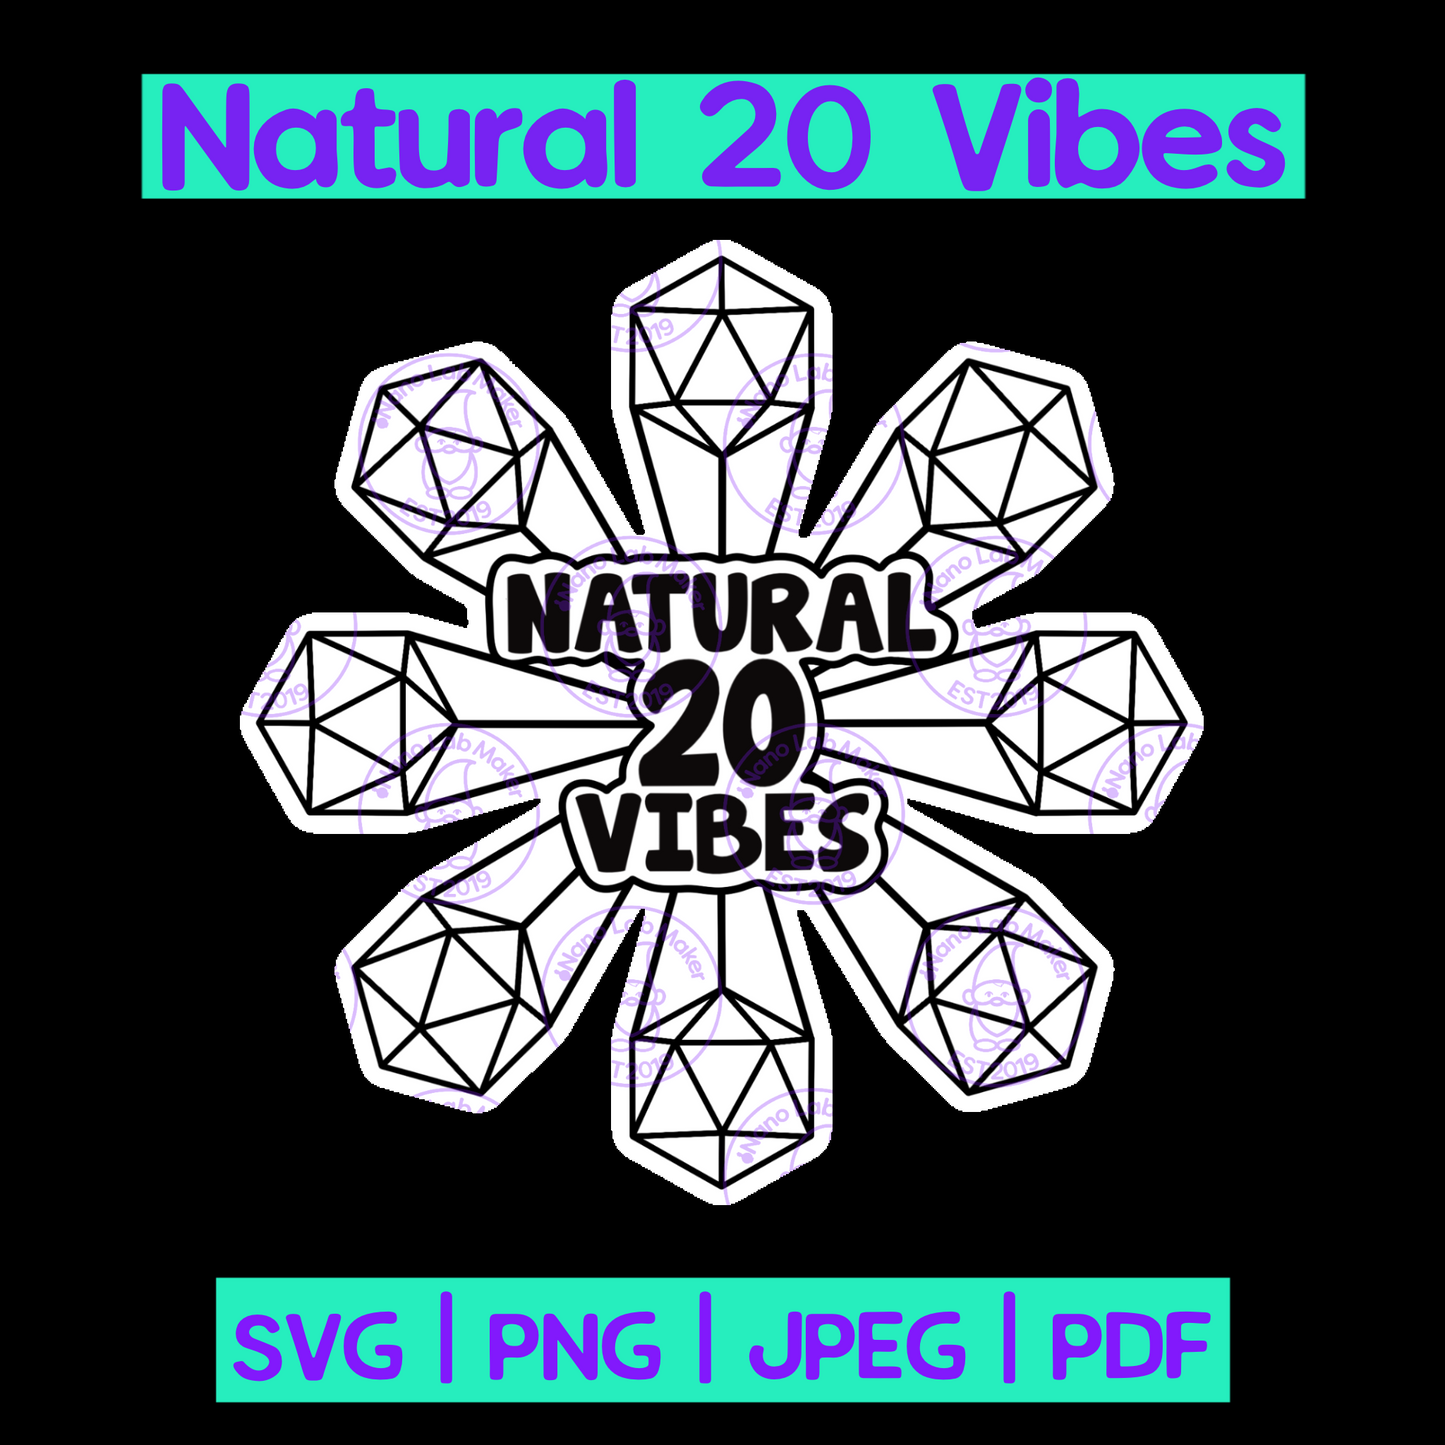 Natural 20 Vibes